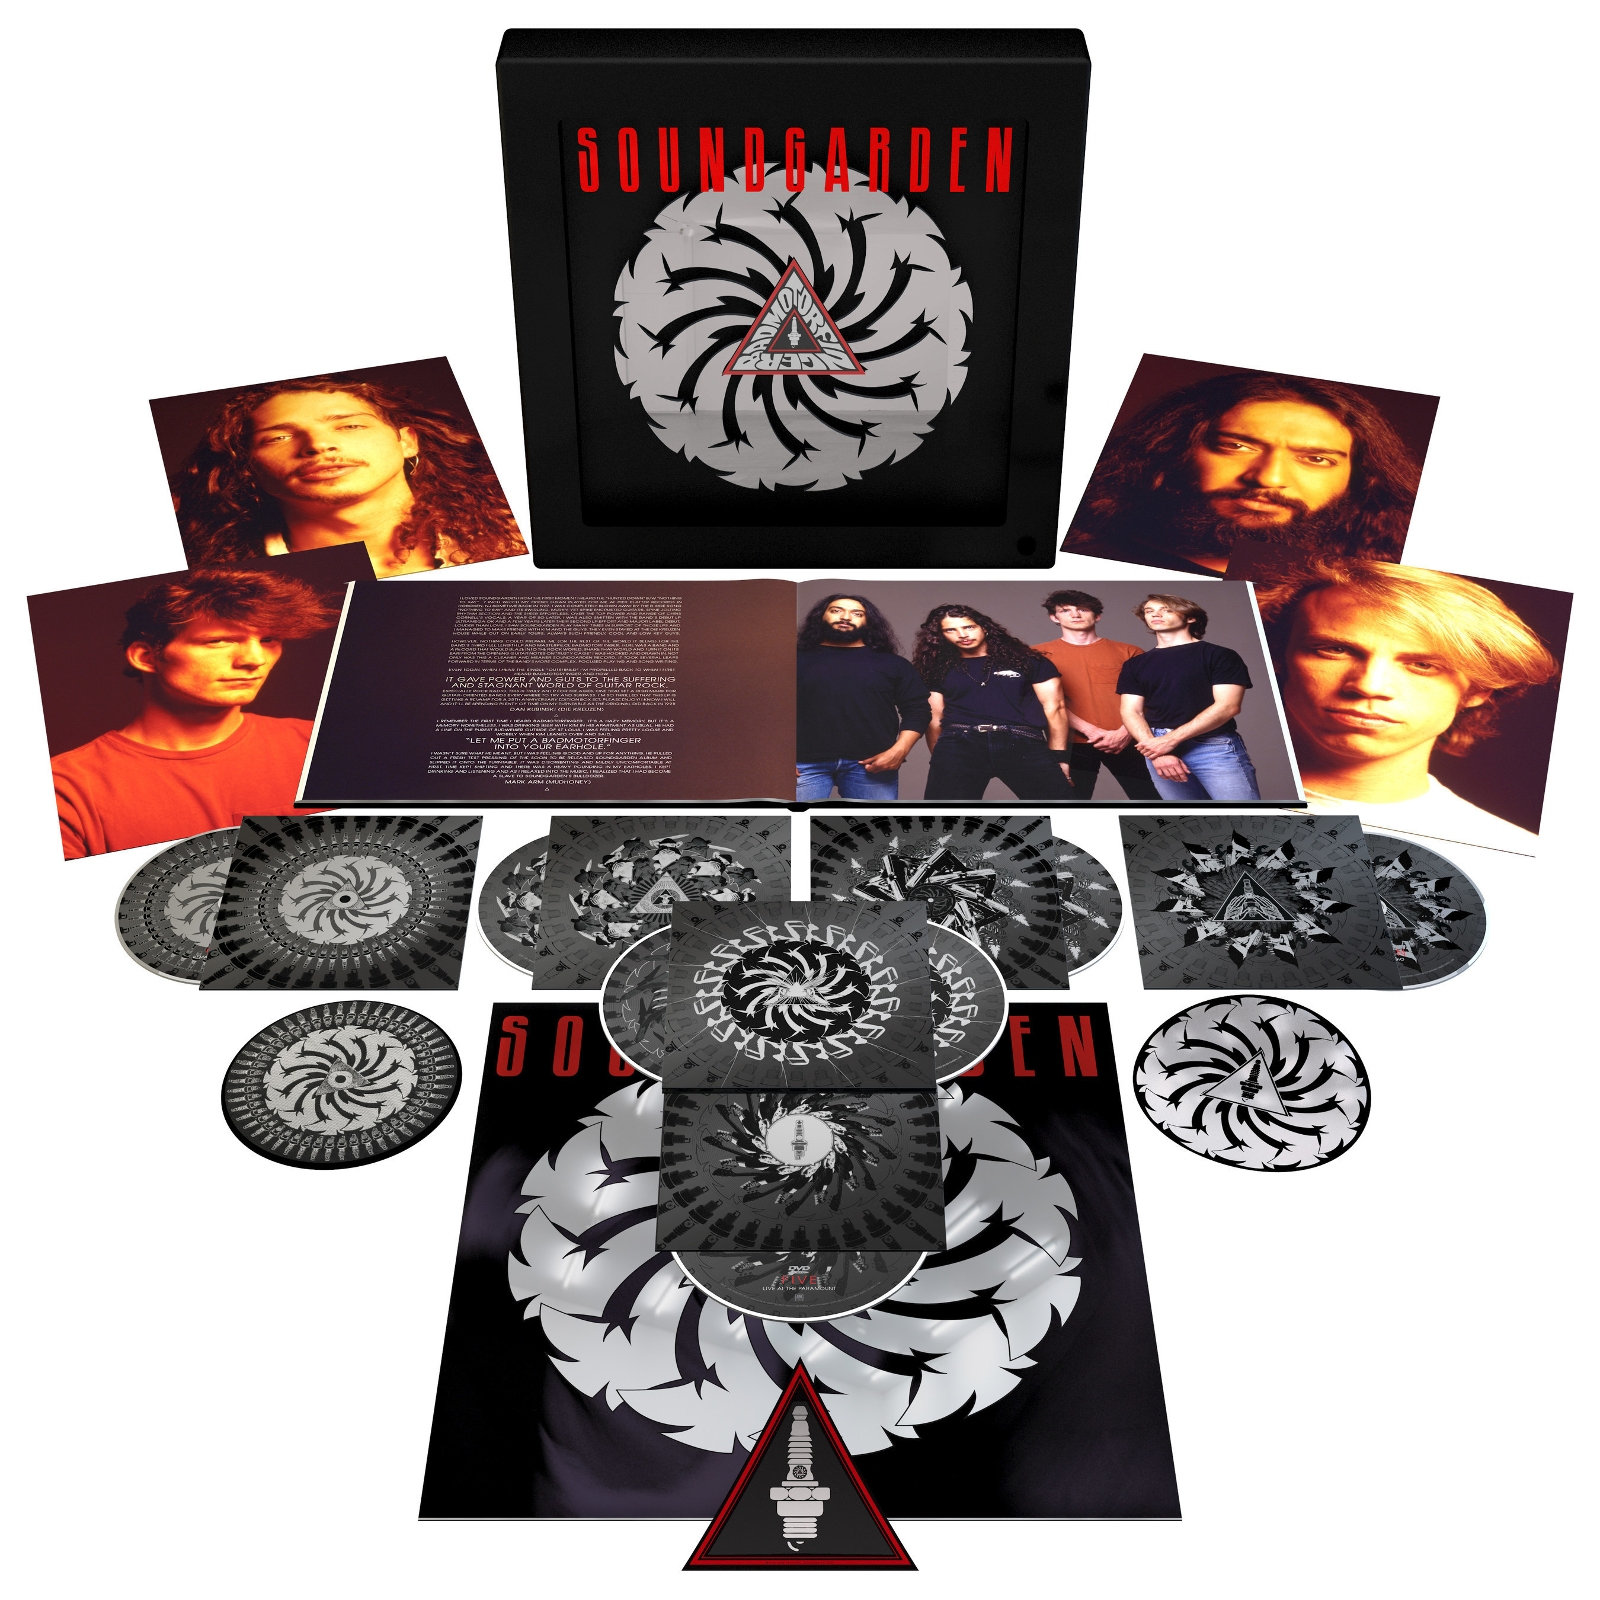 Soundgarden : BadMotorfinger 25th anniversary super deluxe edition